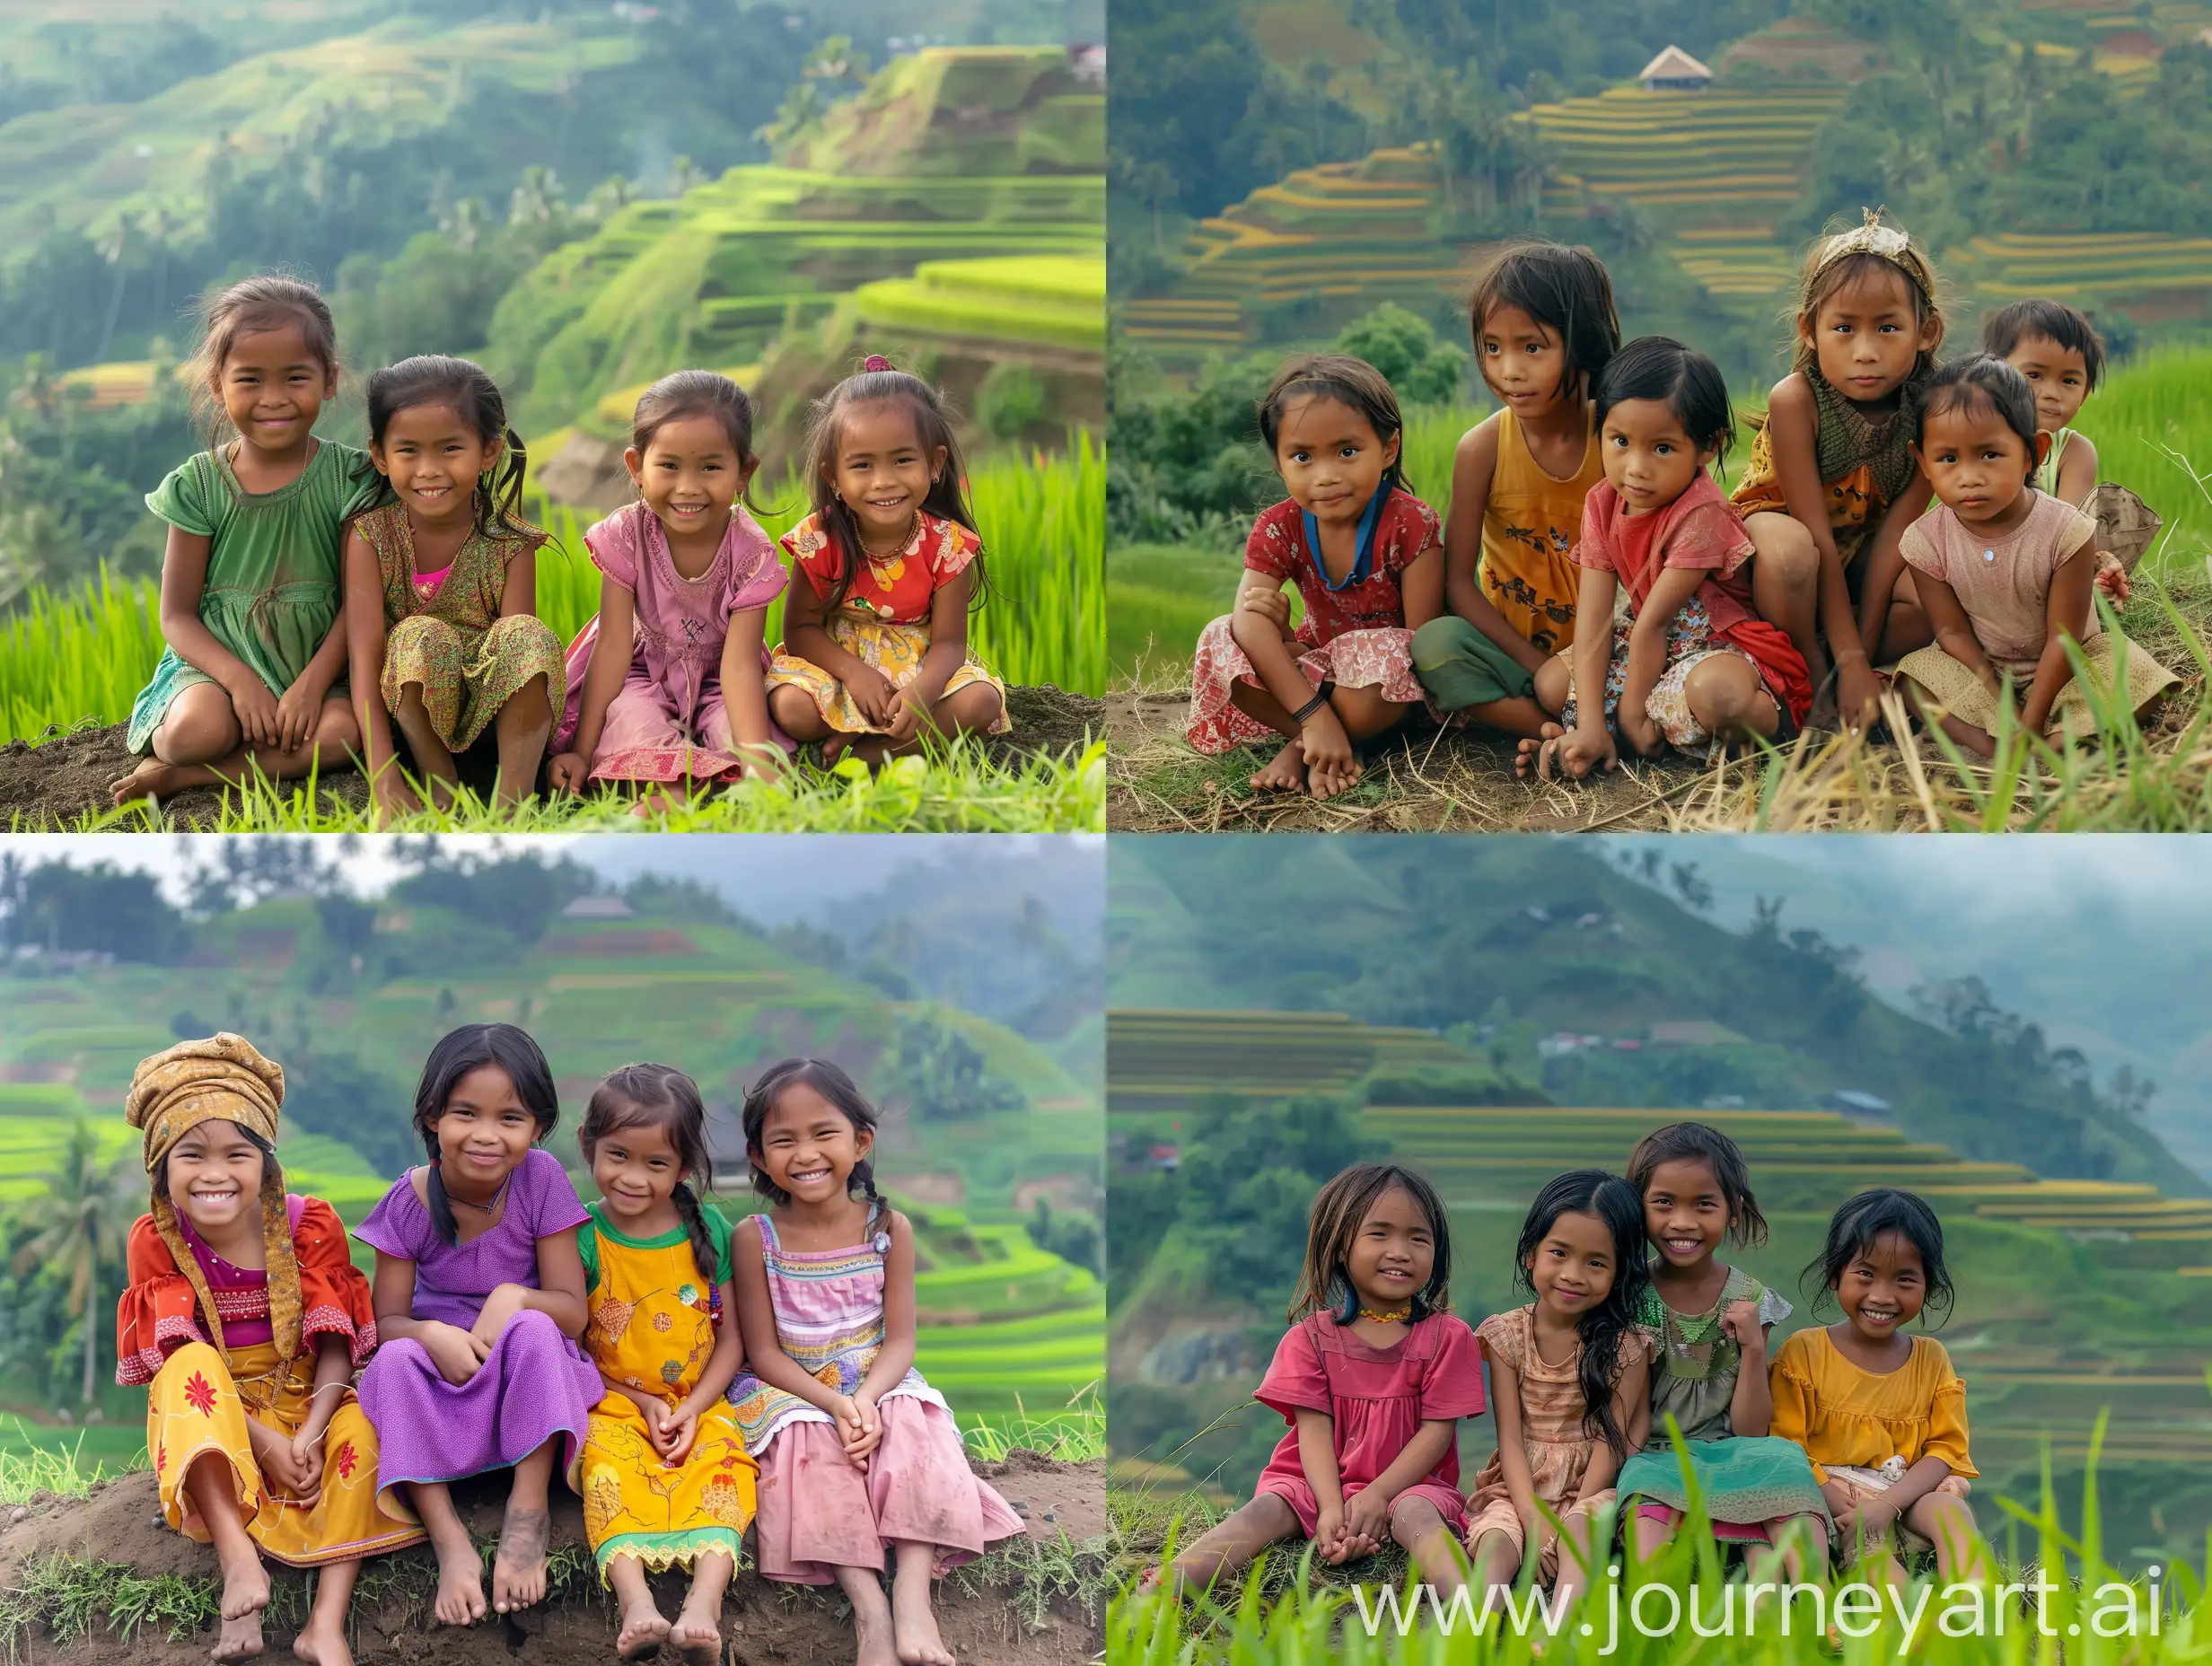 5 lima gadis desa cantik indonesia cilik berusia 7 tahun. Mereka berlima sedang duduk rapih diatas bukit. Dibelakangnya ada sawah dangl gunung bukit indah.Leica kamera. 8K HD. sangat detail. 